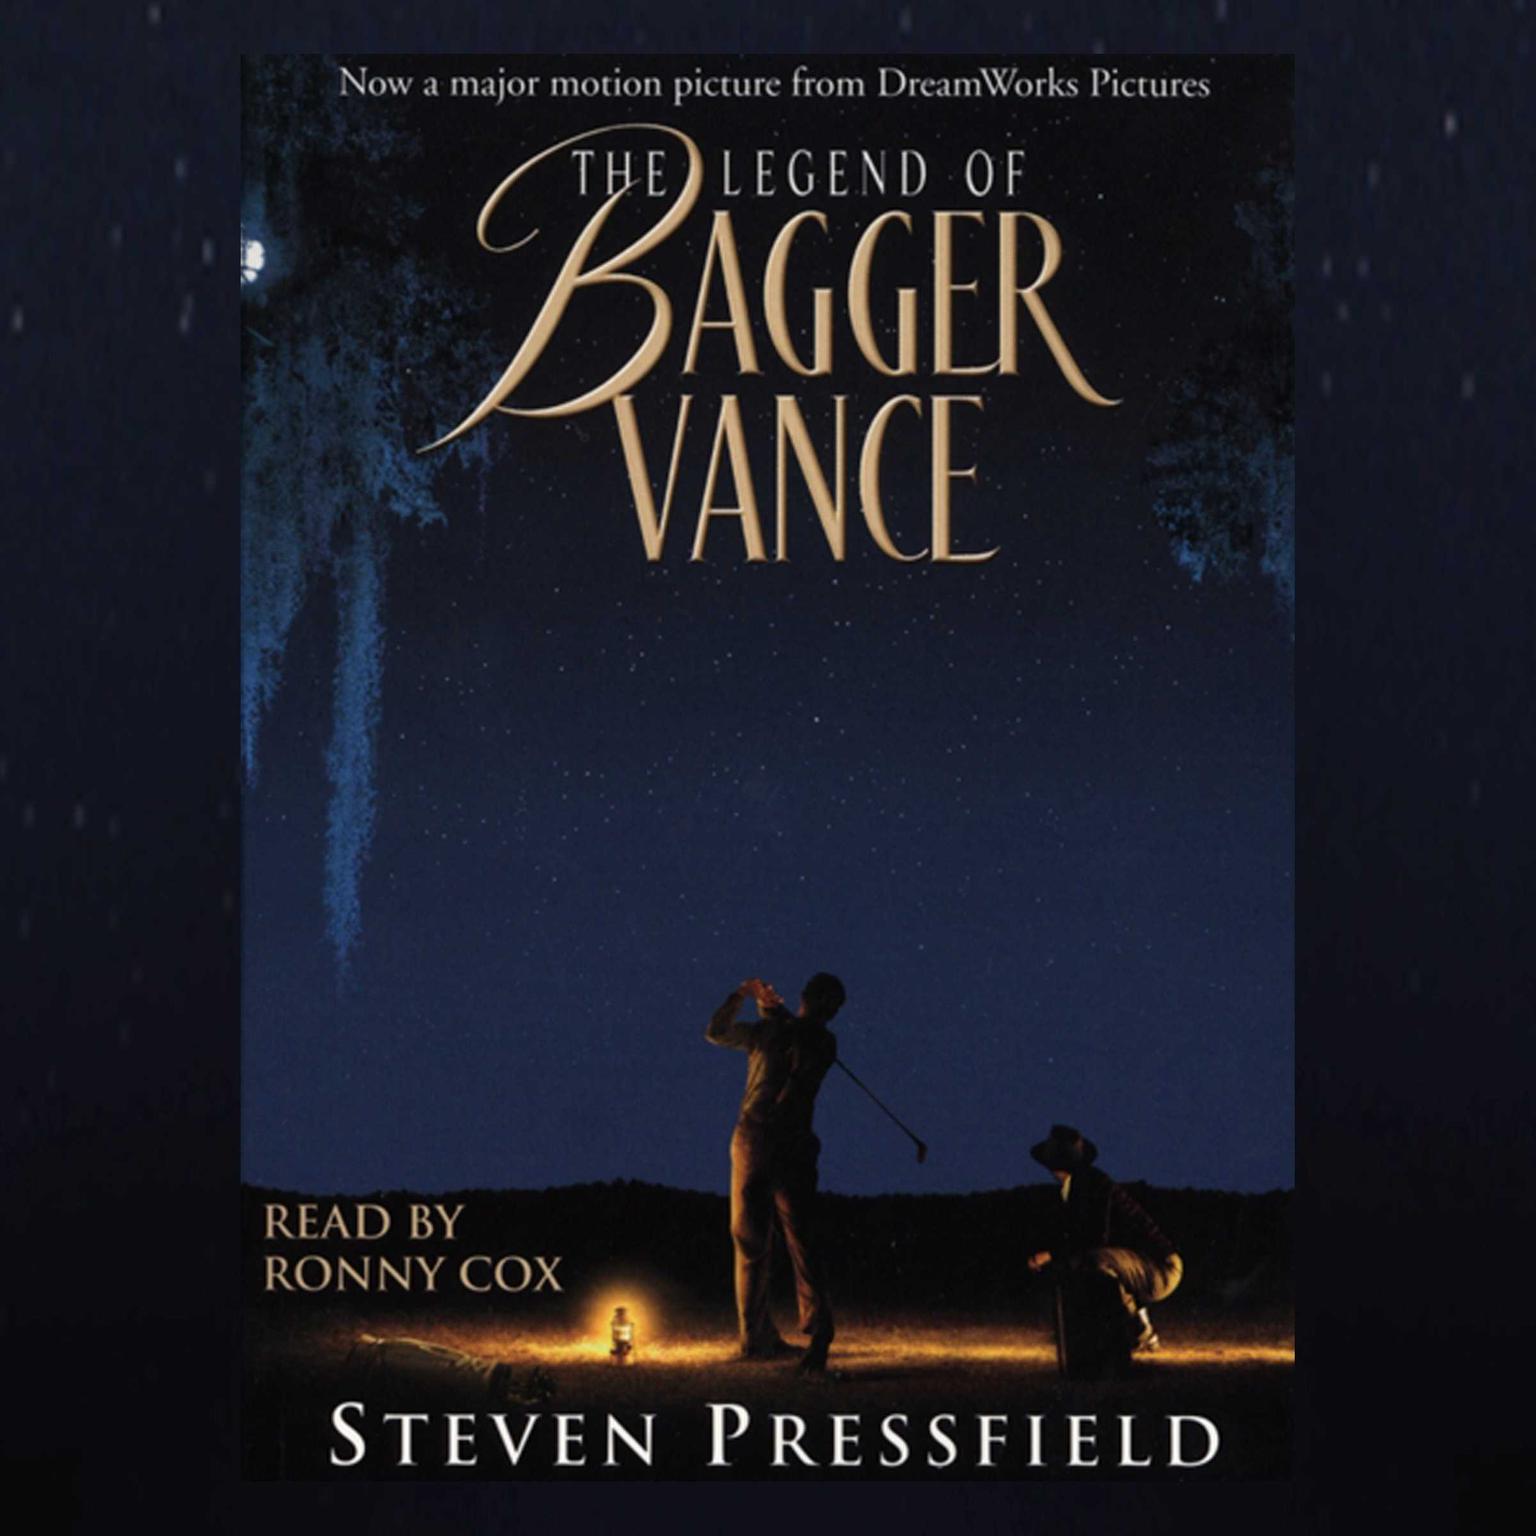 The Legend of Bagger Vance (Movie Tie-In) (Abridged) Audiobook, by Steven Pressfield